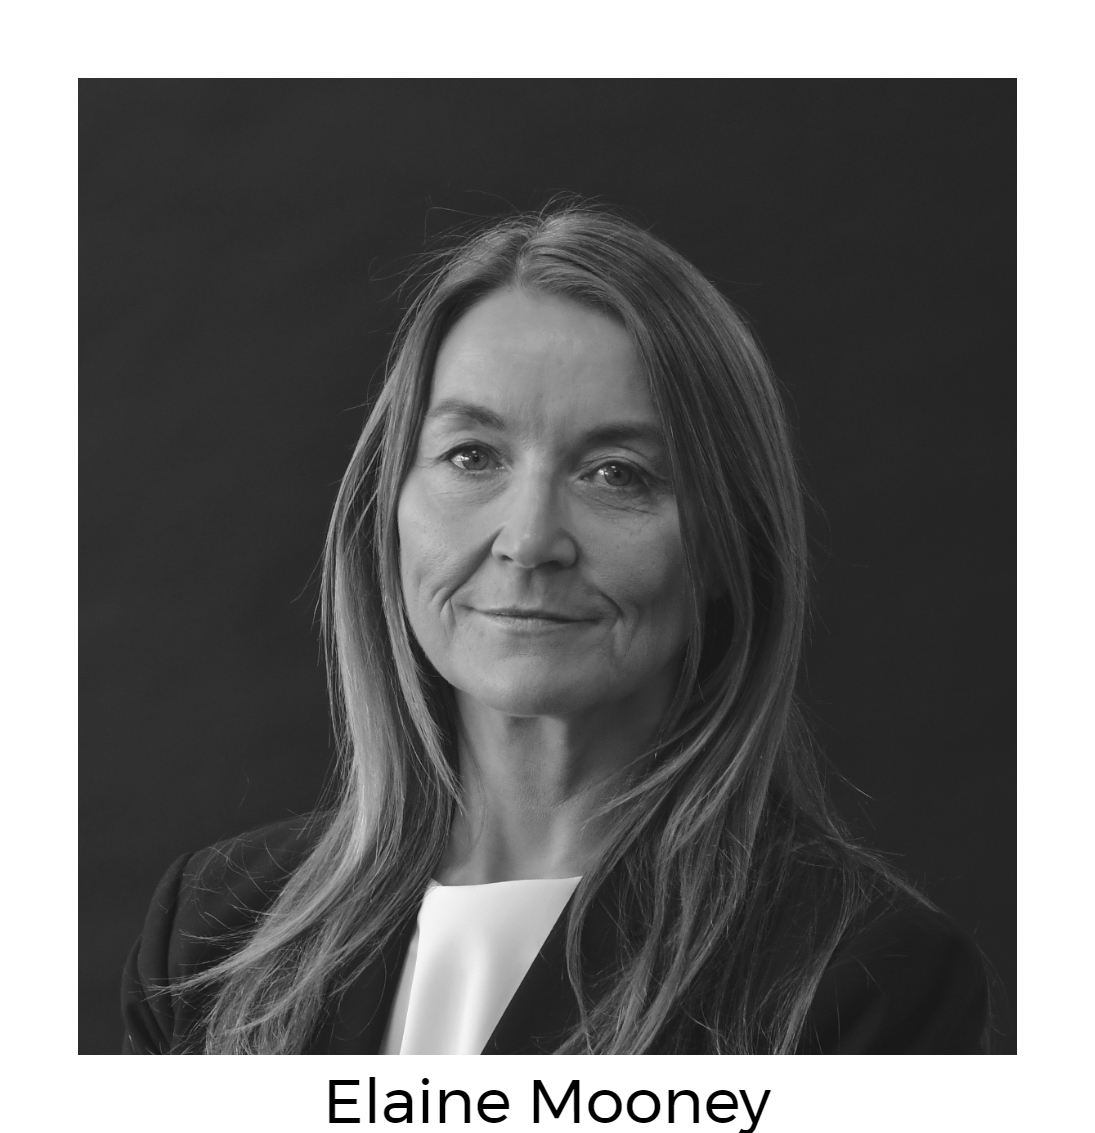 Elaine Mooney